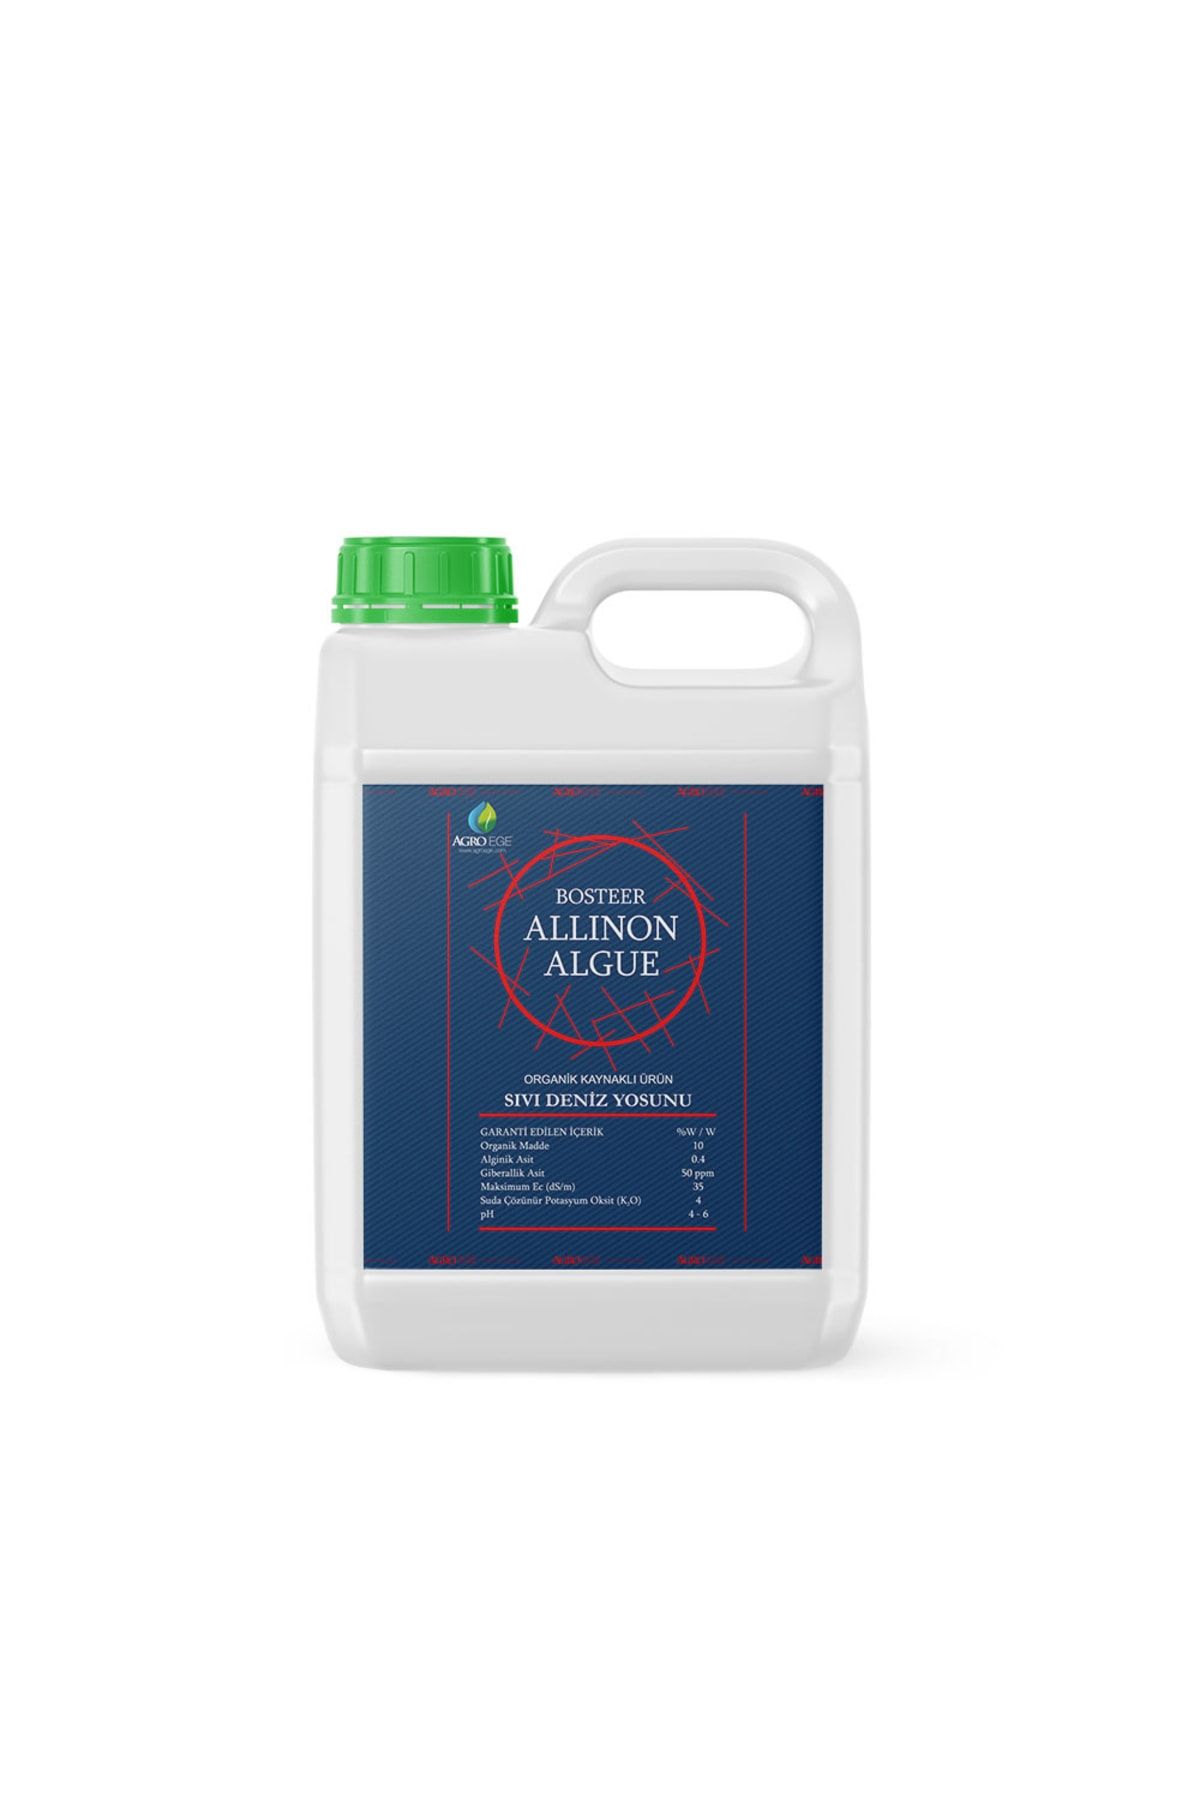 AGROEGE Allion Algue Sıvı Deniz Yosunu 5 Litre